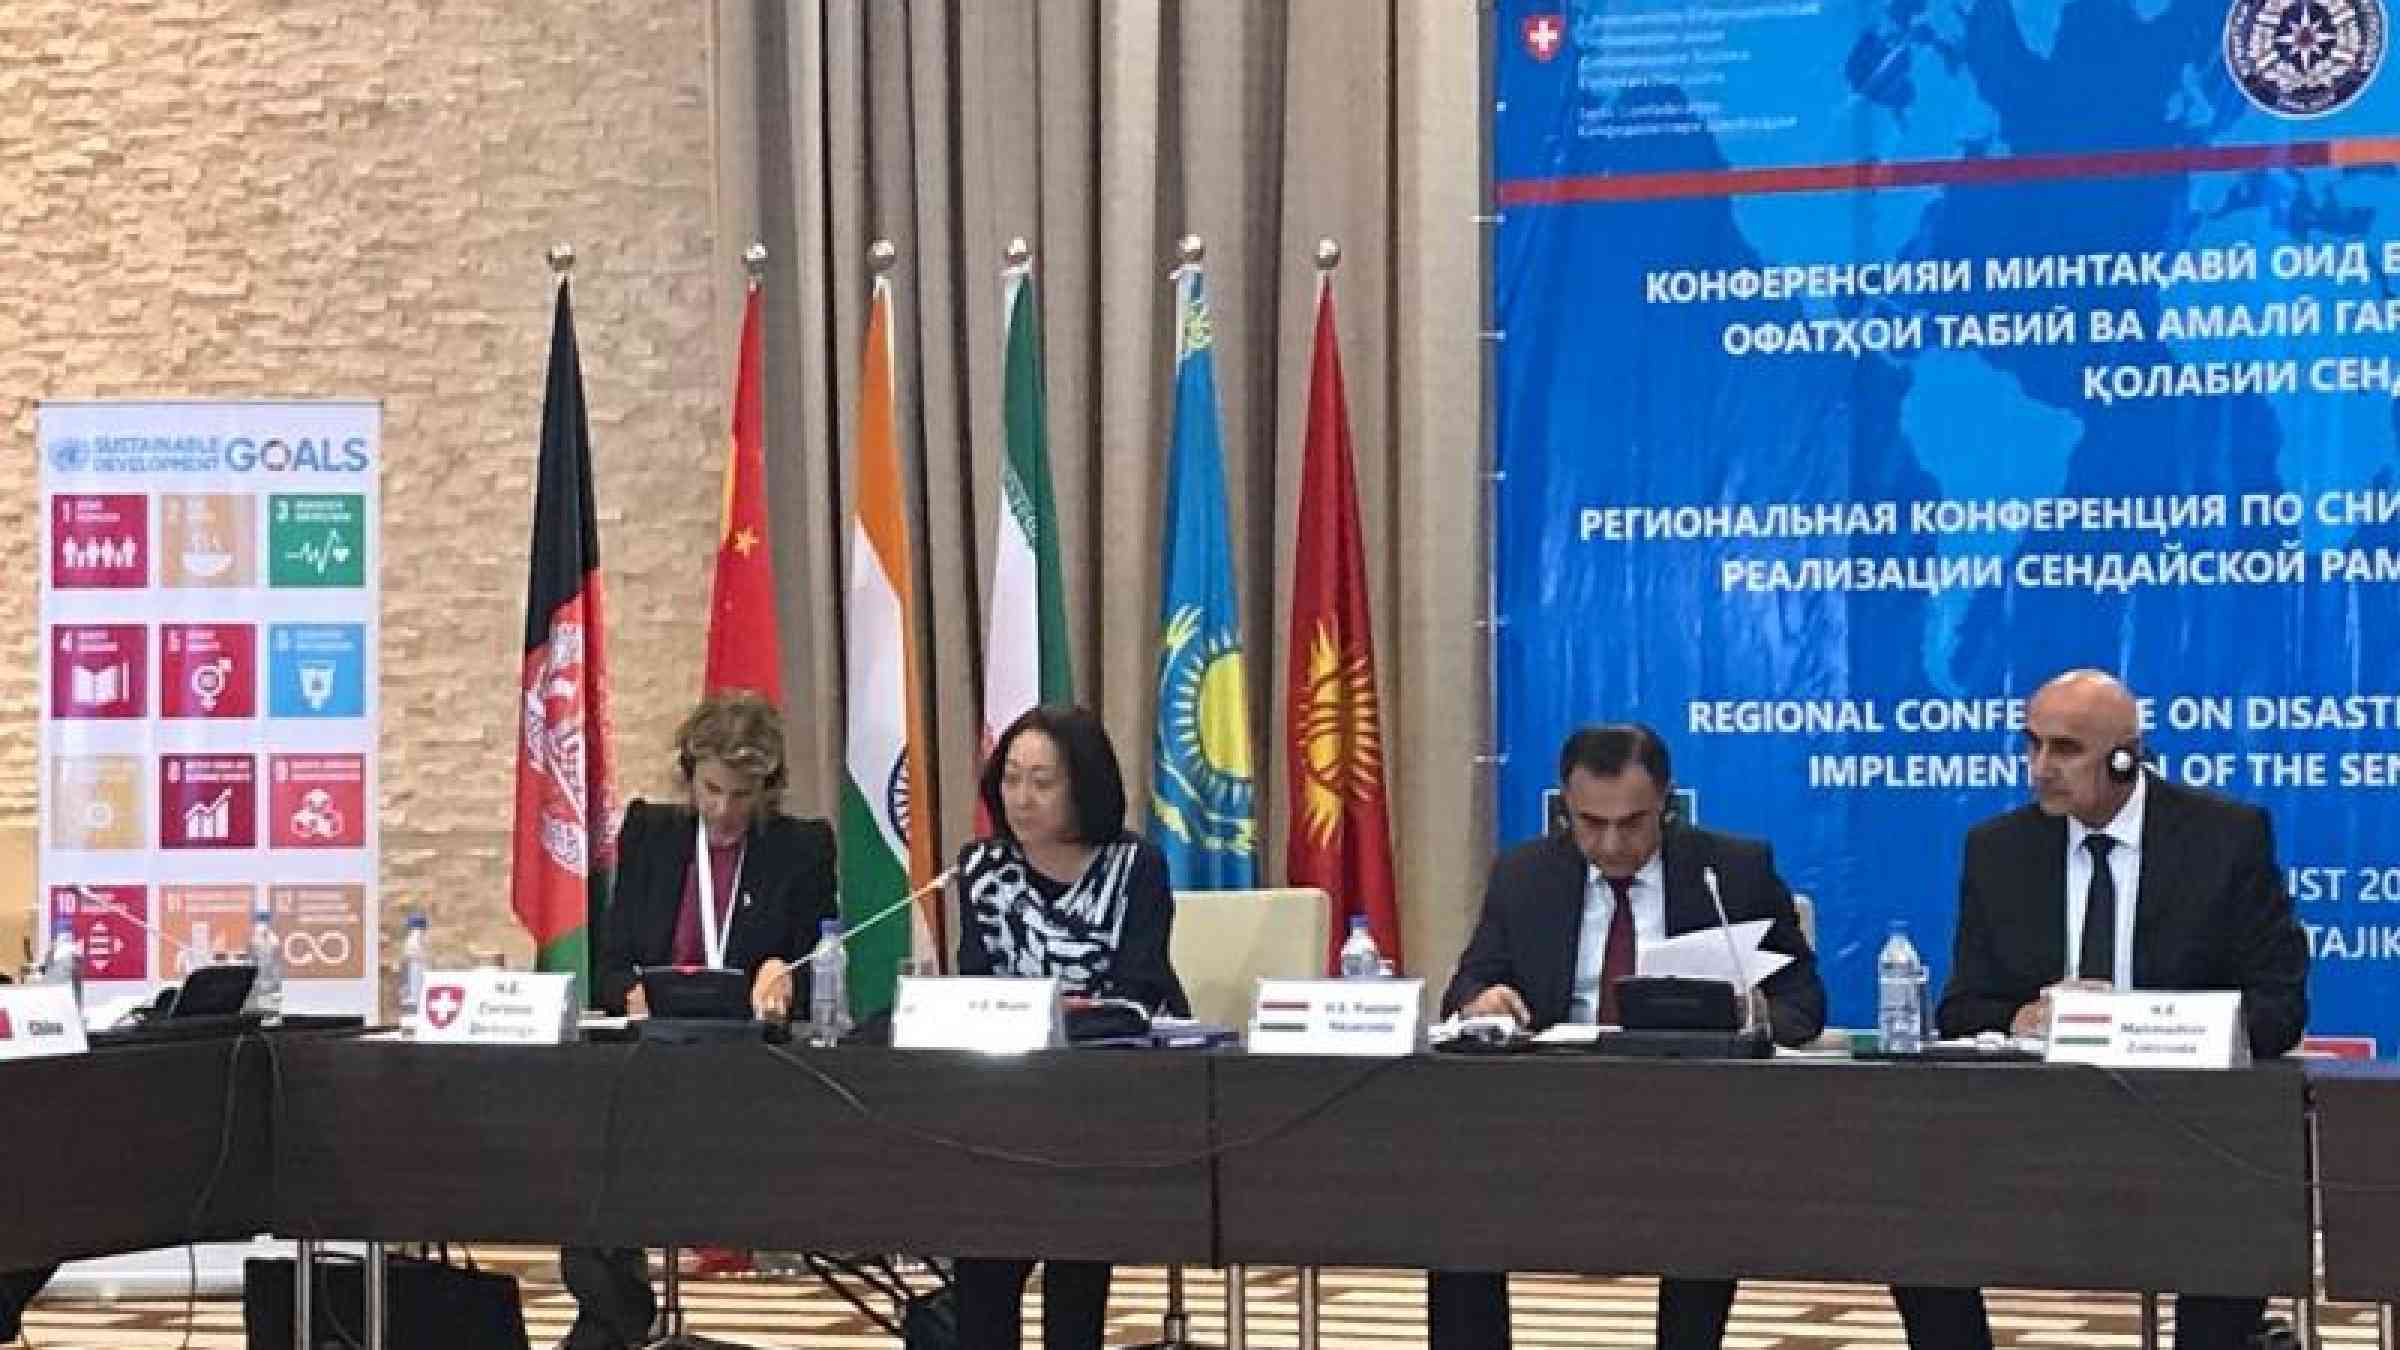 At today's DRR Conference in Dushanbe, (left) Corinne Demenge, Swiss Agency for Development and Cooperation; Mami Mizutori, UNDRR; Rustam Nazarzoda, Chair, Committee of Emergency Situations, Tajikistan; Tajikistan Deputy PM, Mahmadtoir Zokirzoda.